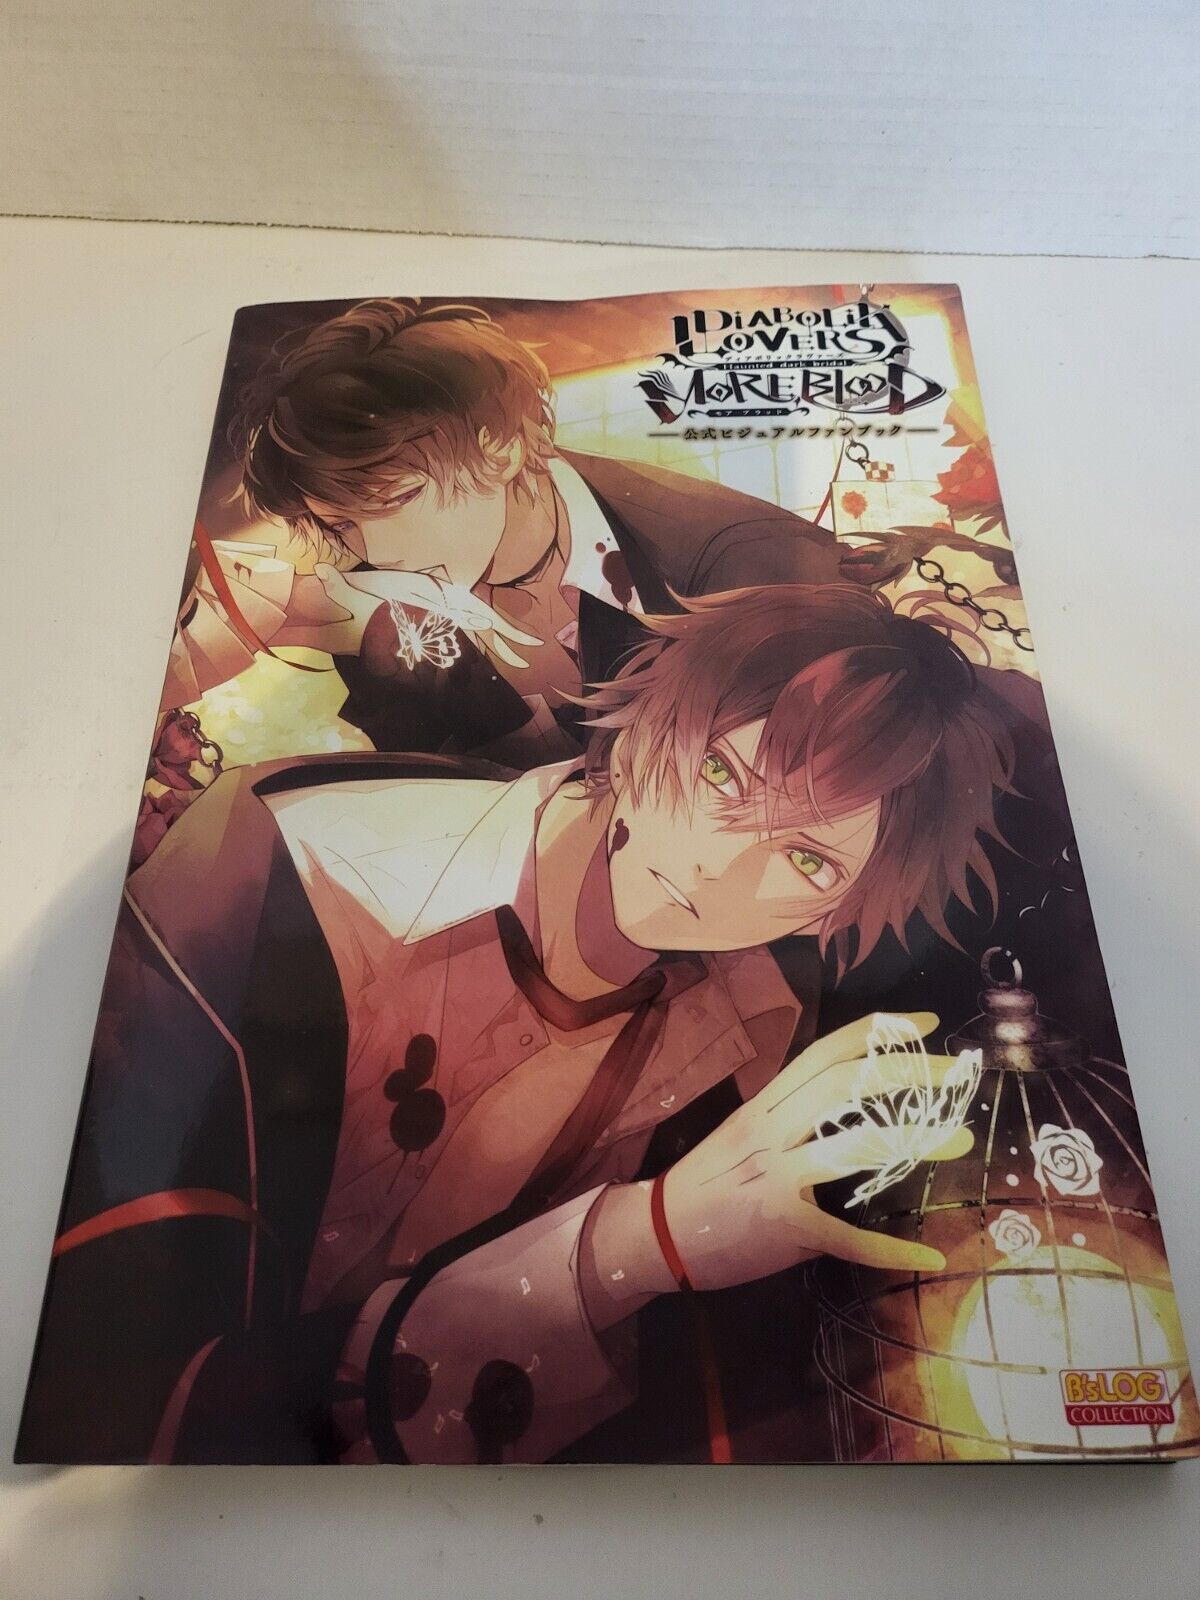 DIABOLIK LOVERS MORE, BLOOD Official Visual Fan Book Japan Import Japanese Edit.